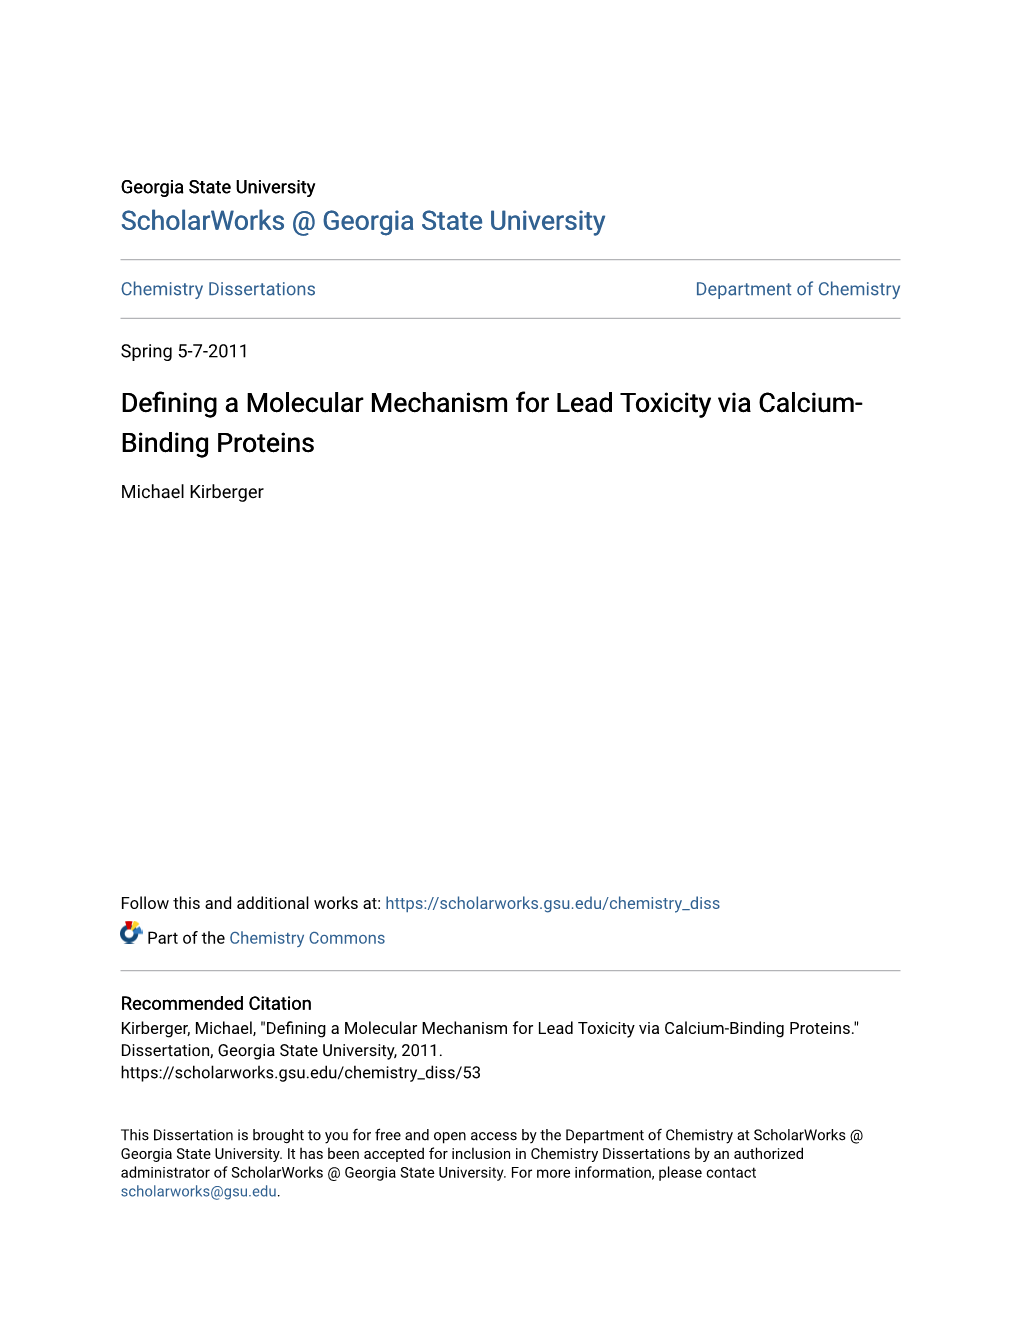 Defining a Molecular Mechanism for Lead Toxicity Via Calcium-Binding